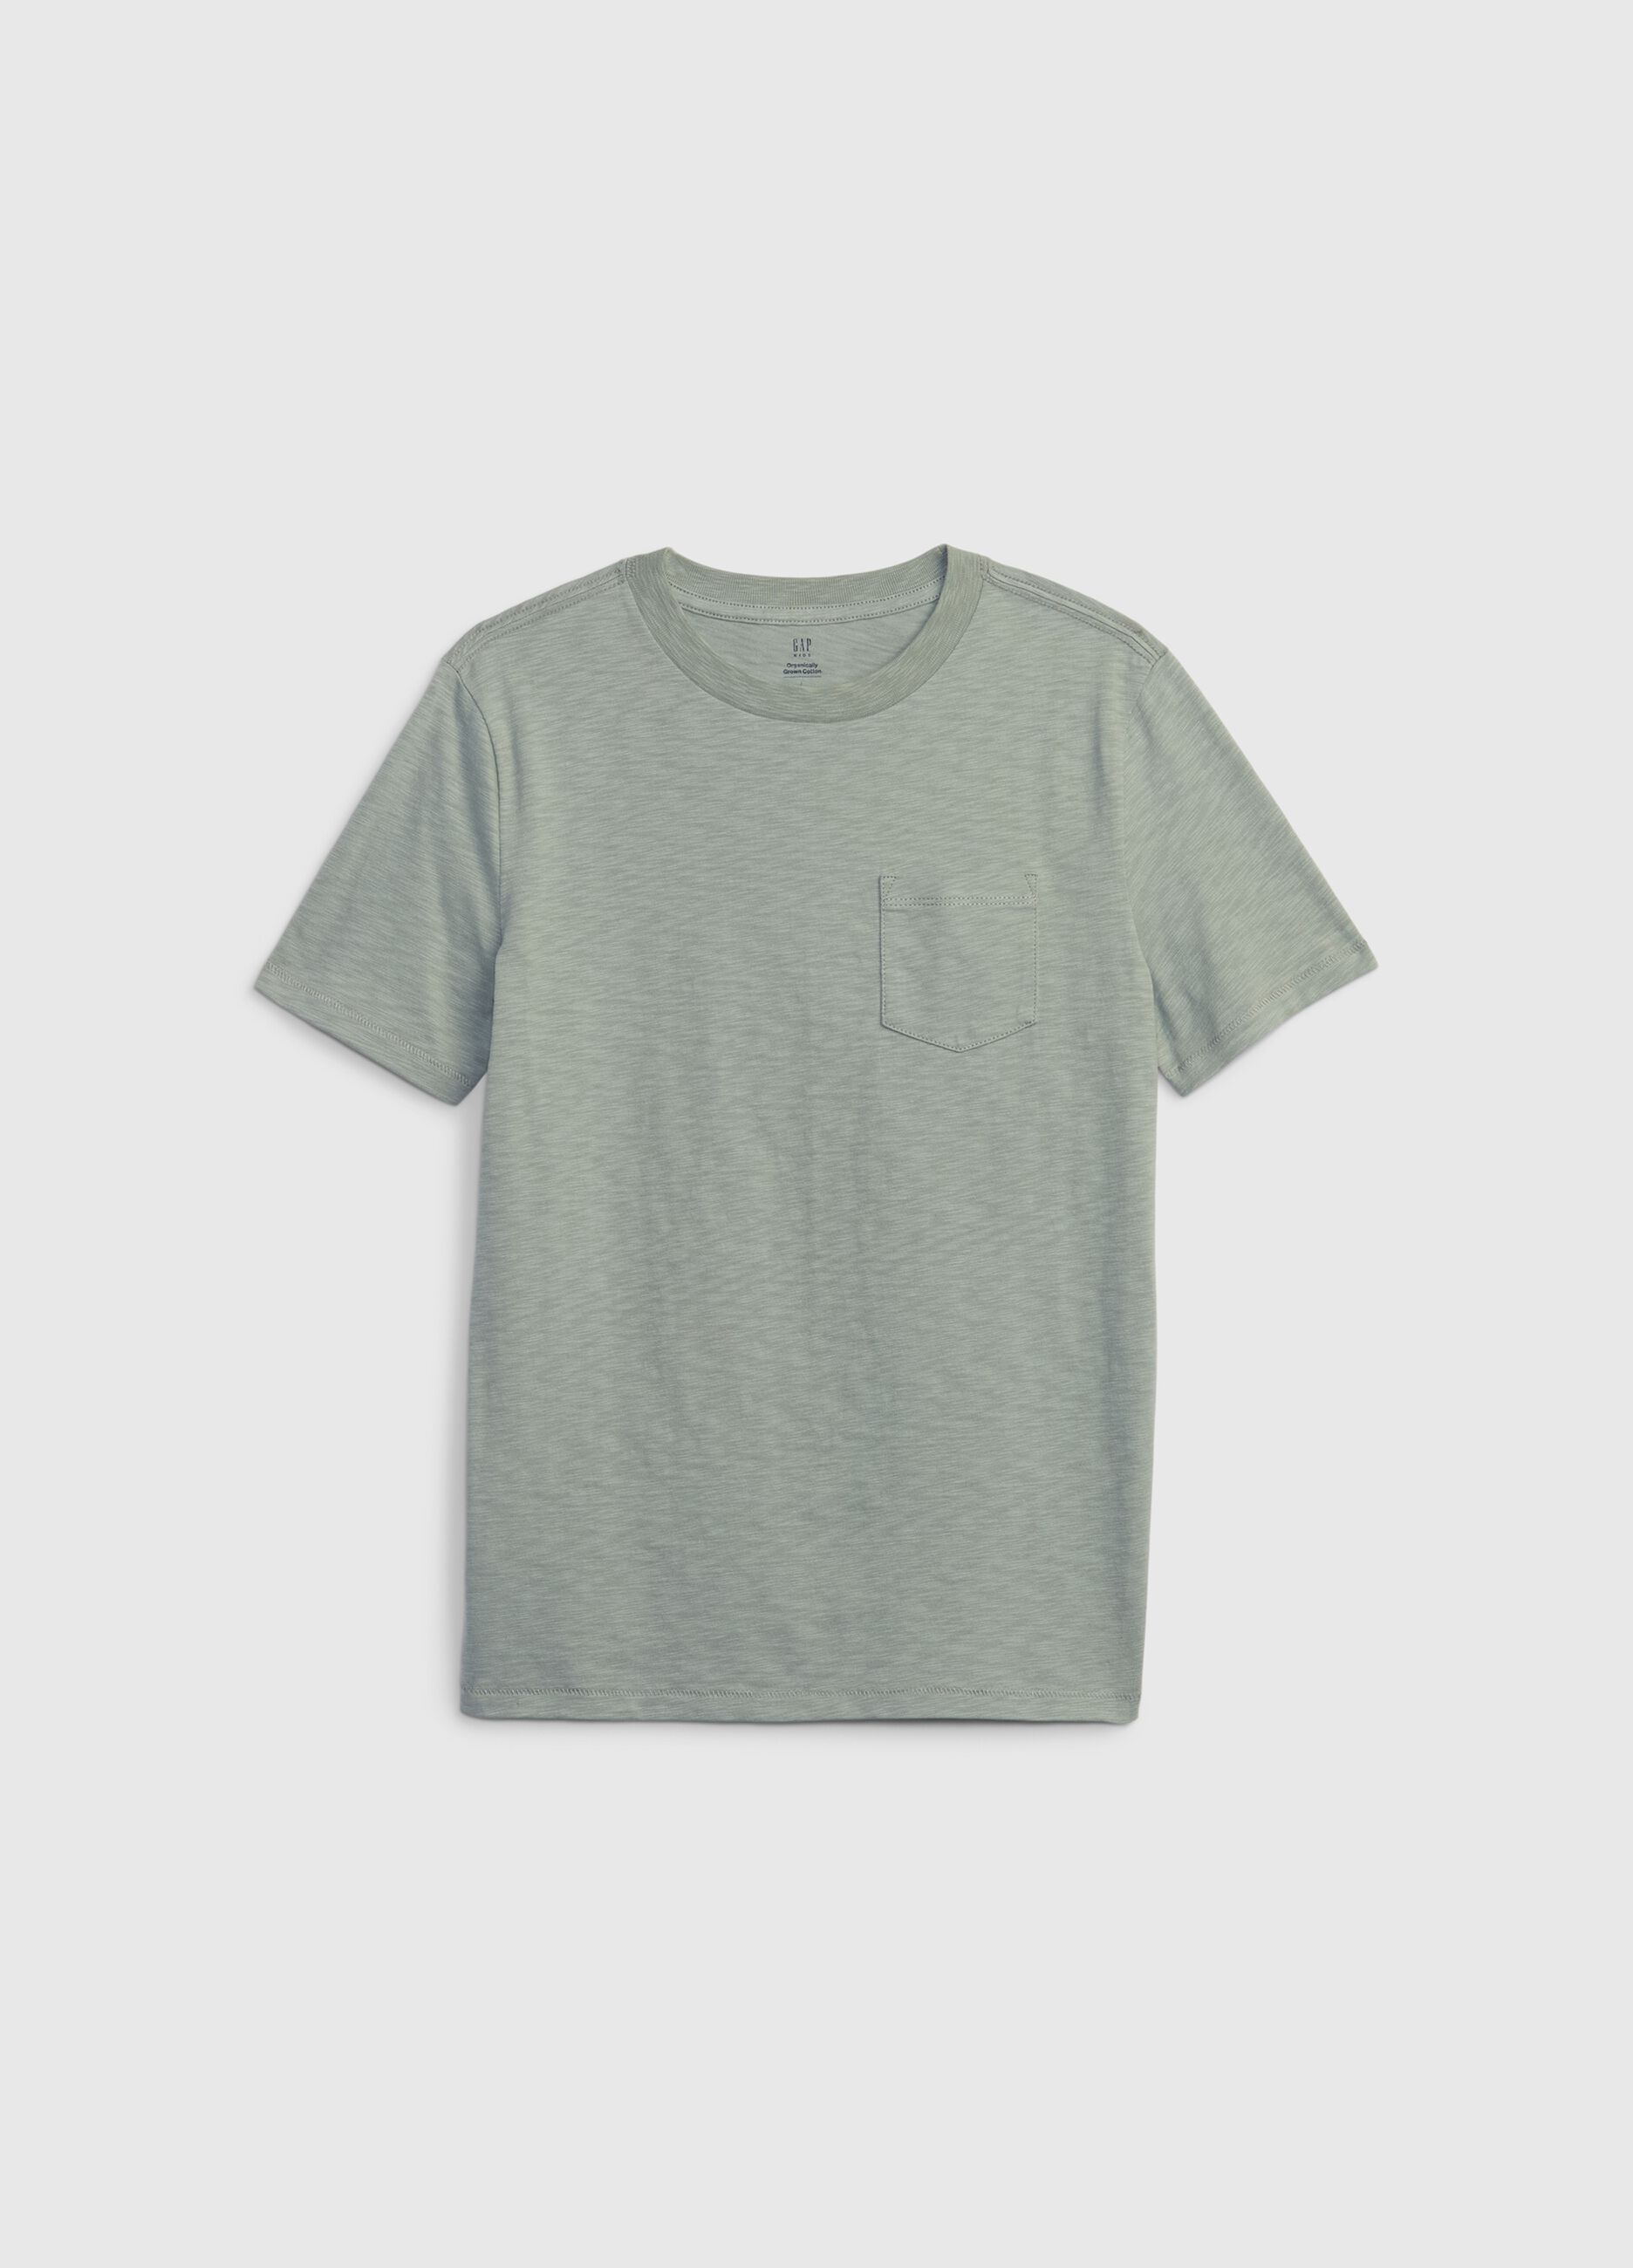 Warehouse Slub Cotton T-Shirt - White w/ Pocket